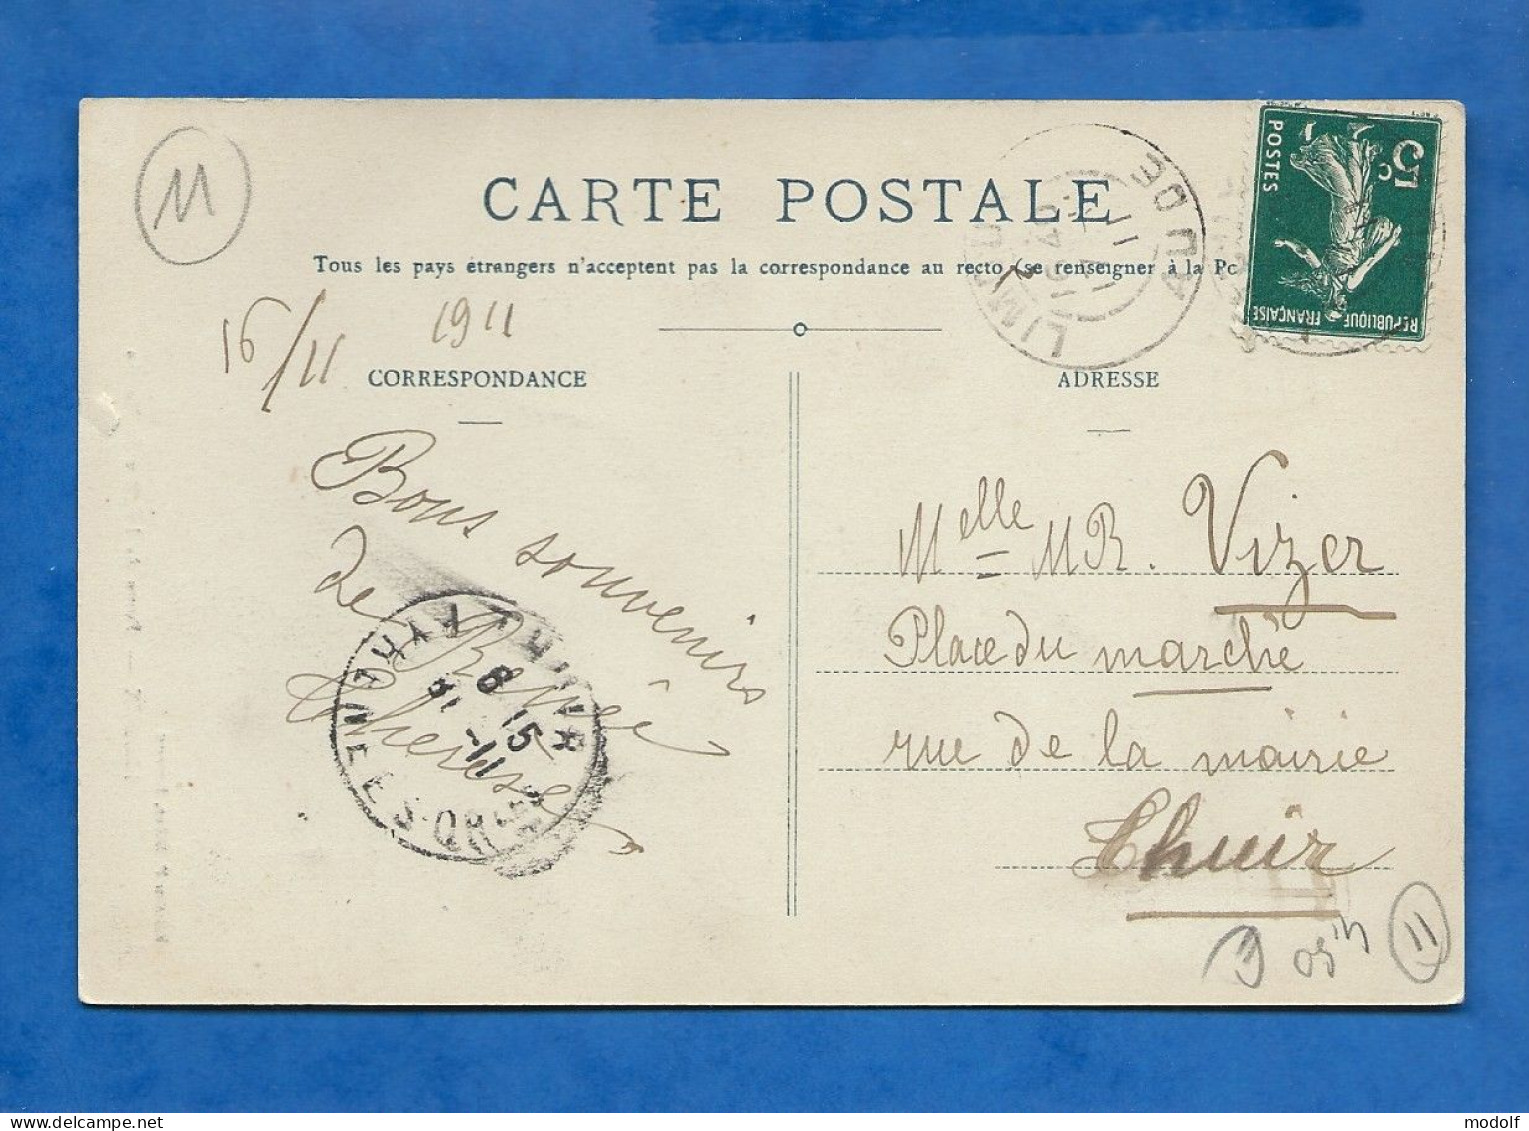 CPA - 11 - Limoux - Porte De L'Eglise St-Martin - Circulée En 1911 - Limoux